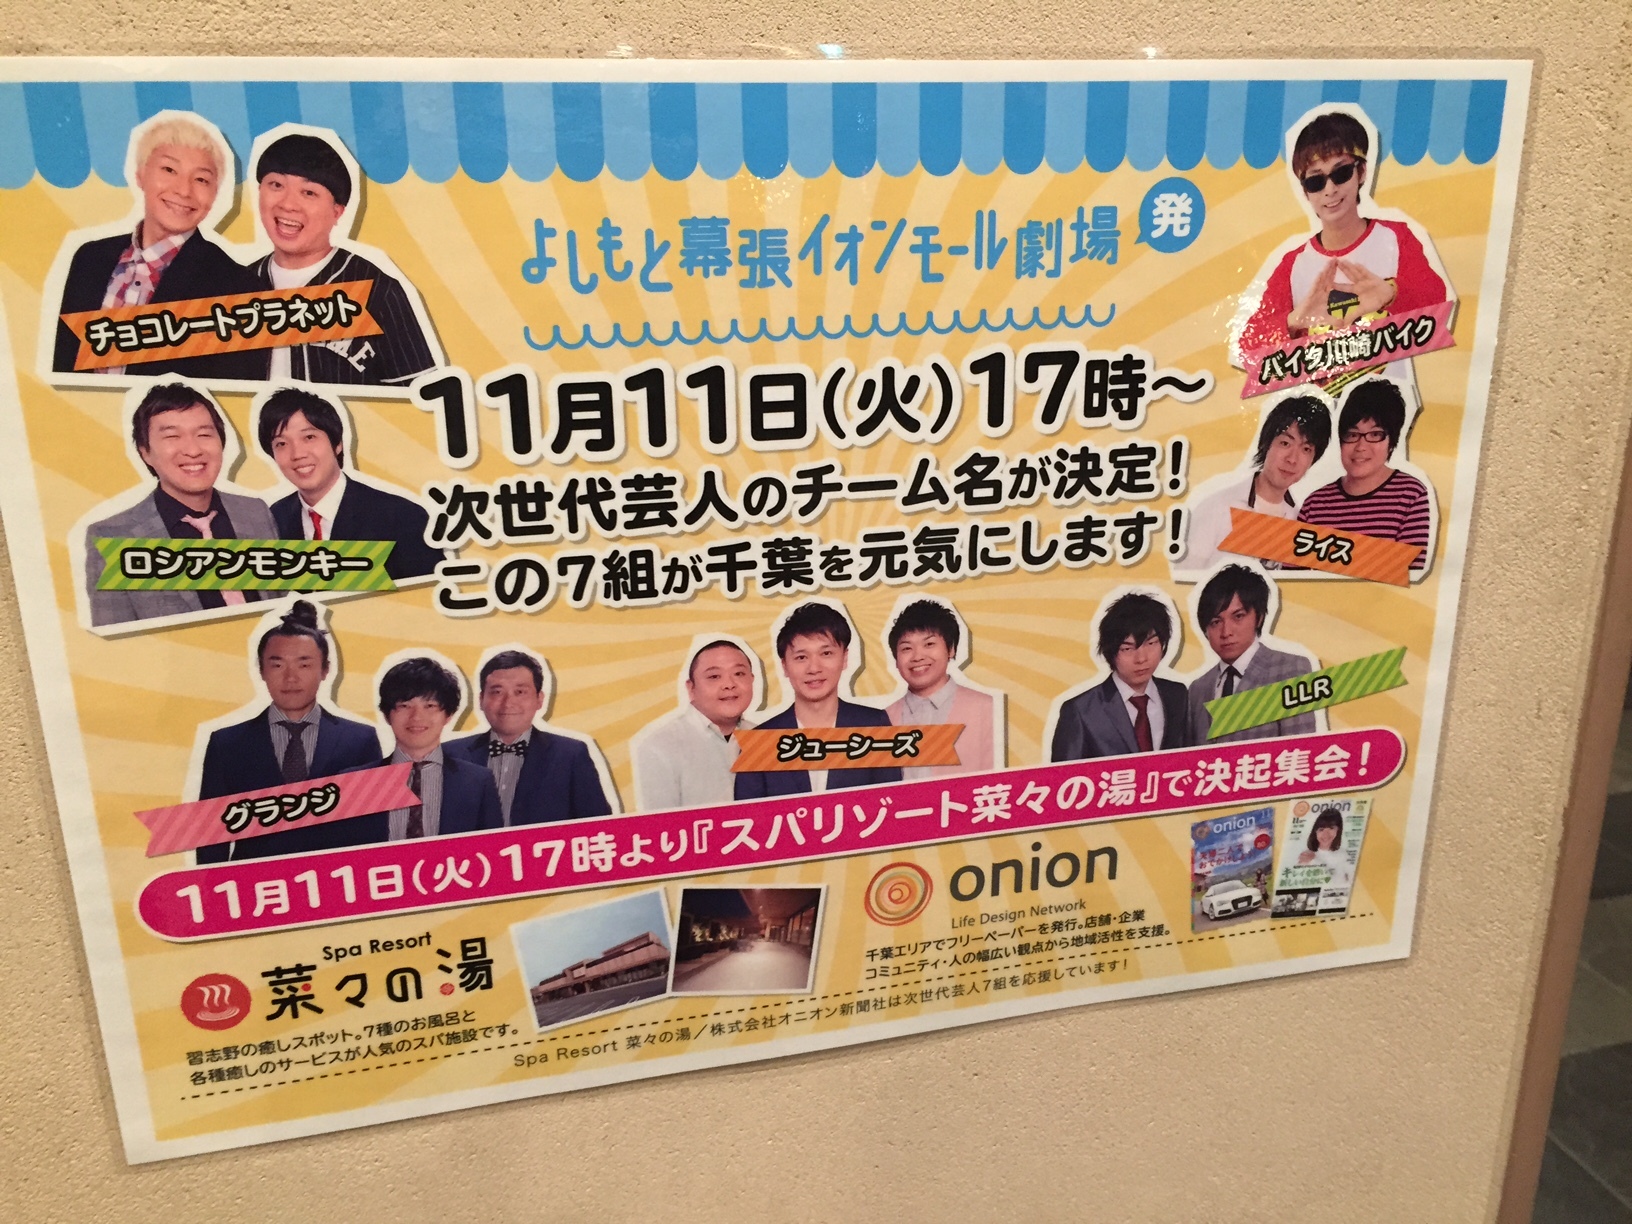 http://news.yoshimoto.co.jp/photos/uncategorized/2014/11/11/IMG_0212.jpg